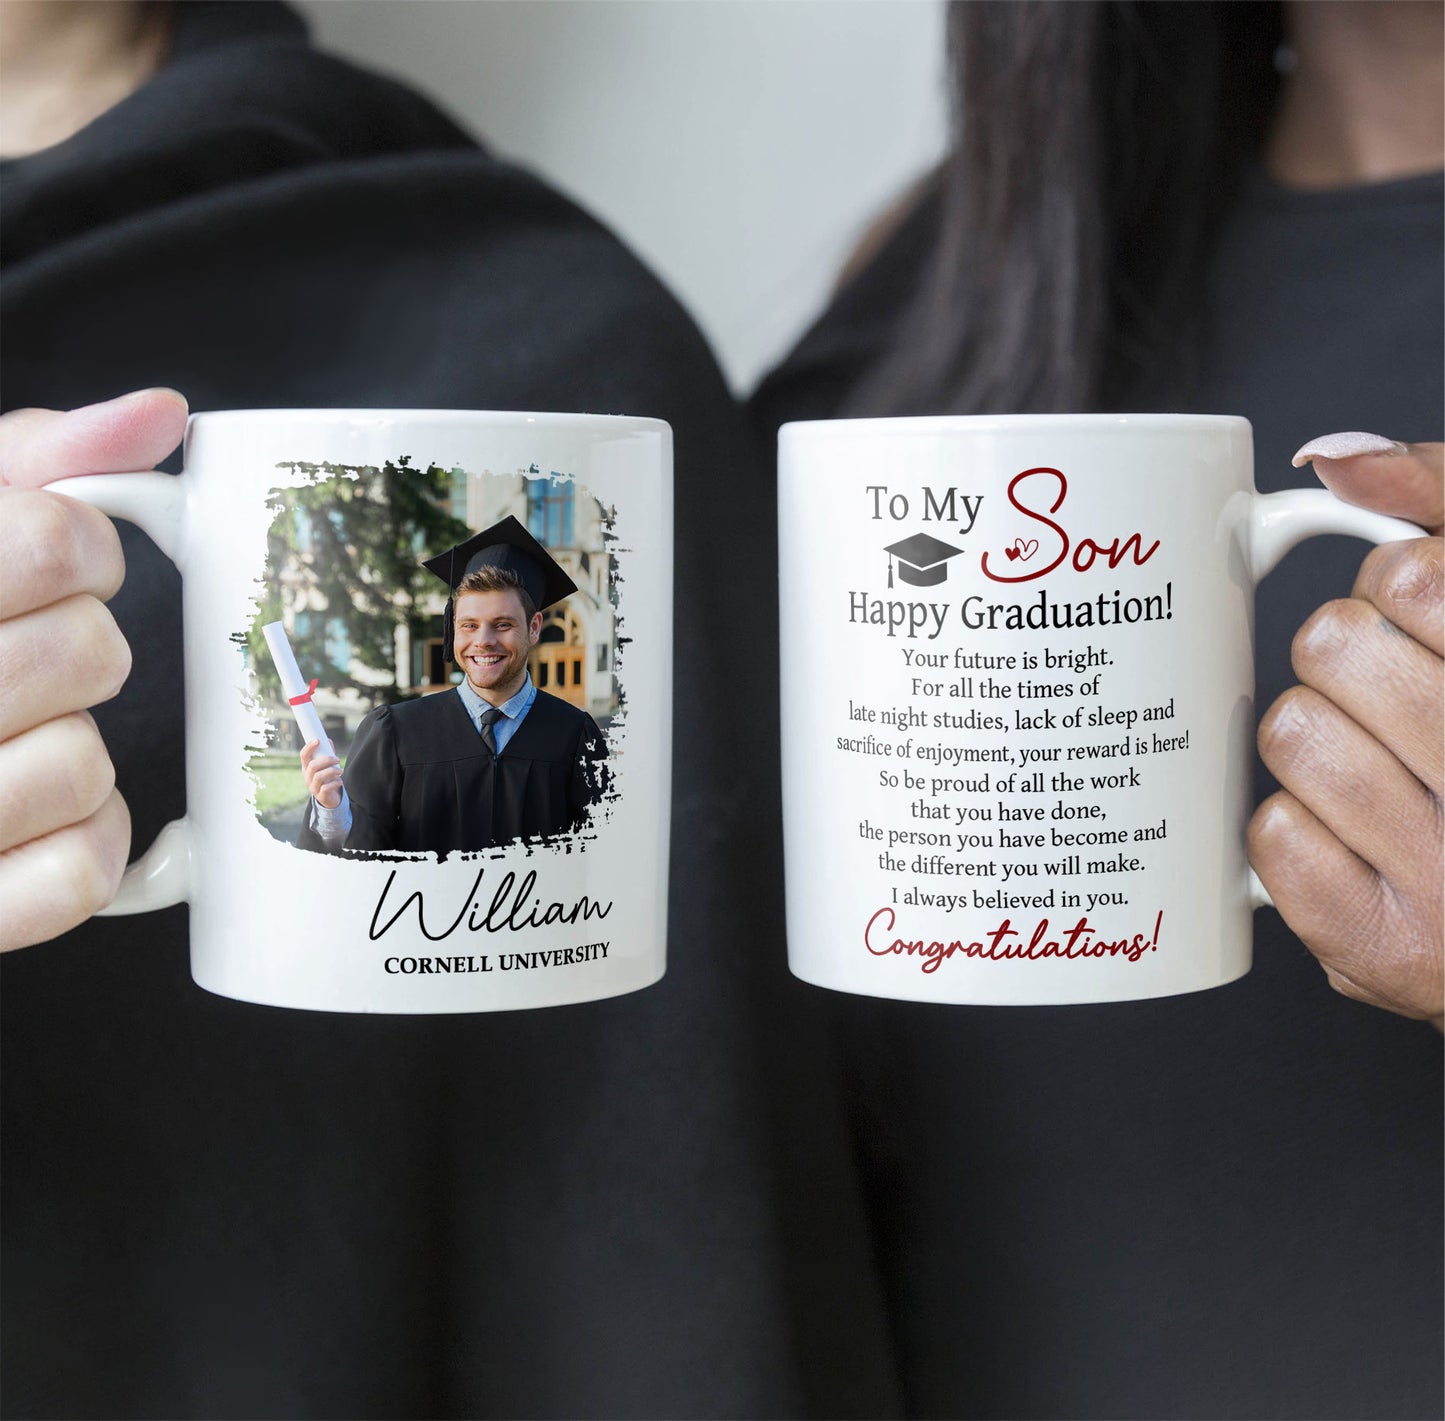 Happy Graduation Your Future Is Bright - Personalized Photo Mug